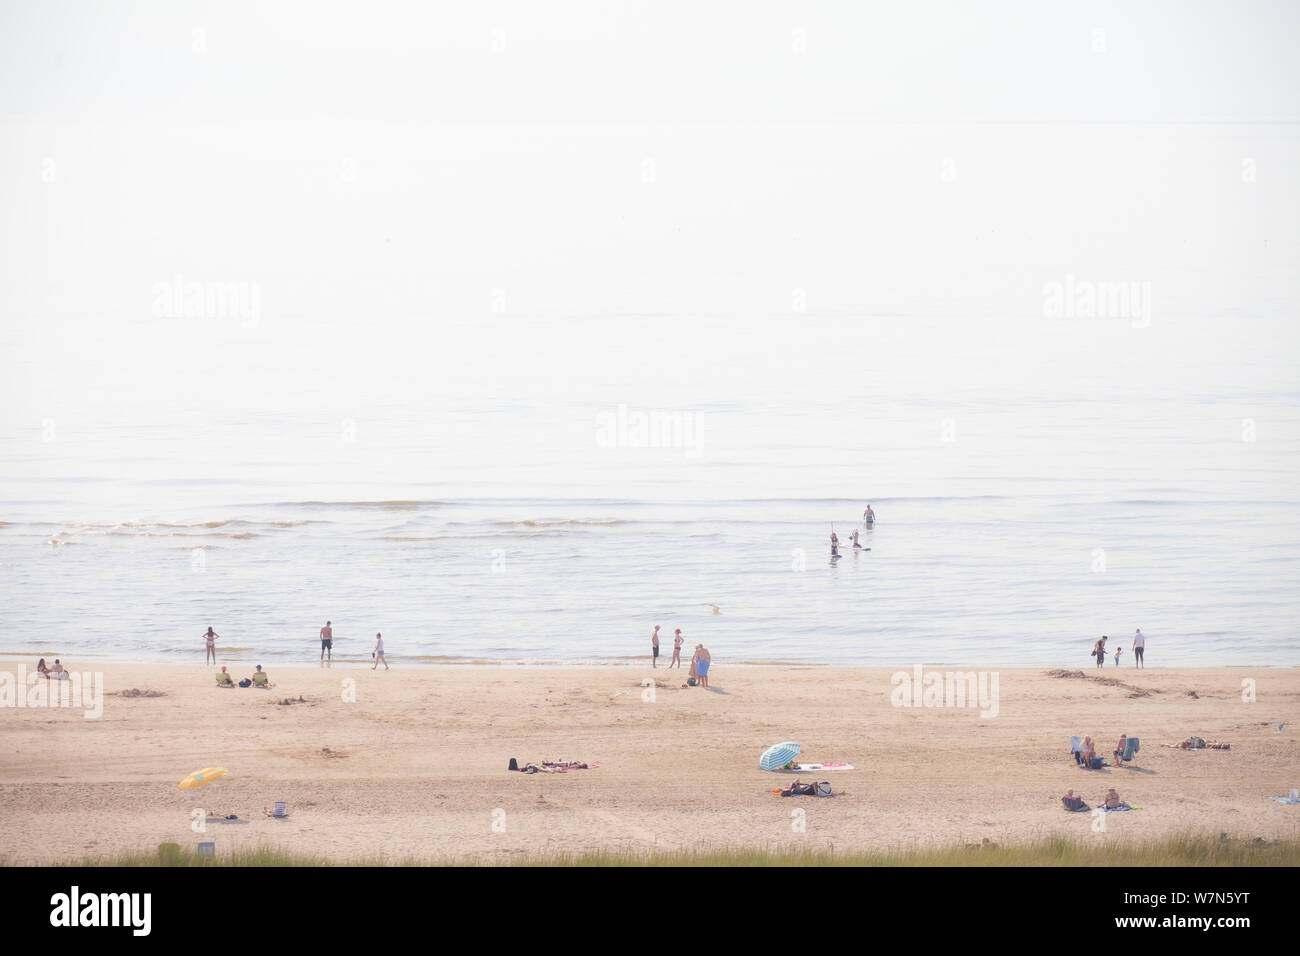 Egmond aan Zee, Netherlands - bathing people on the beach in the glistening sun (high key exposure) Stock Photo